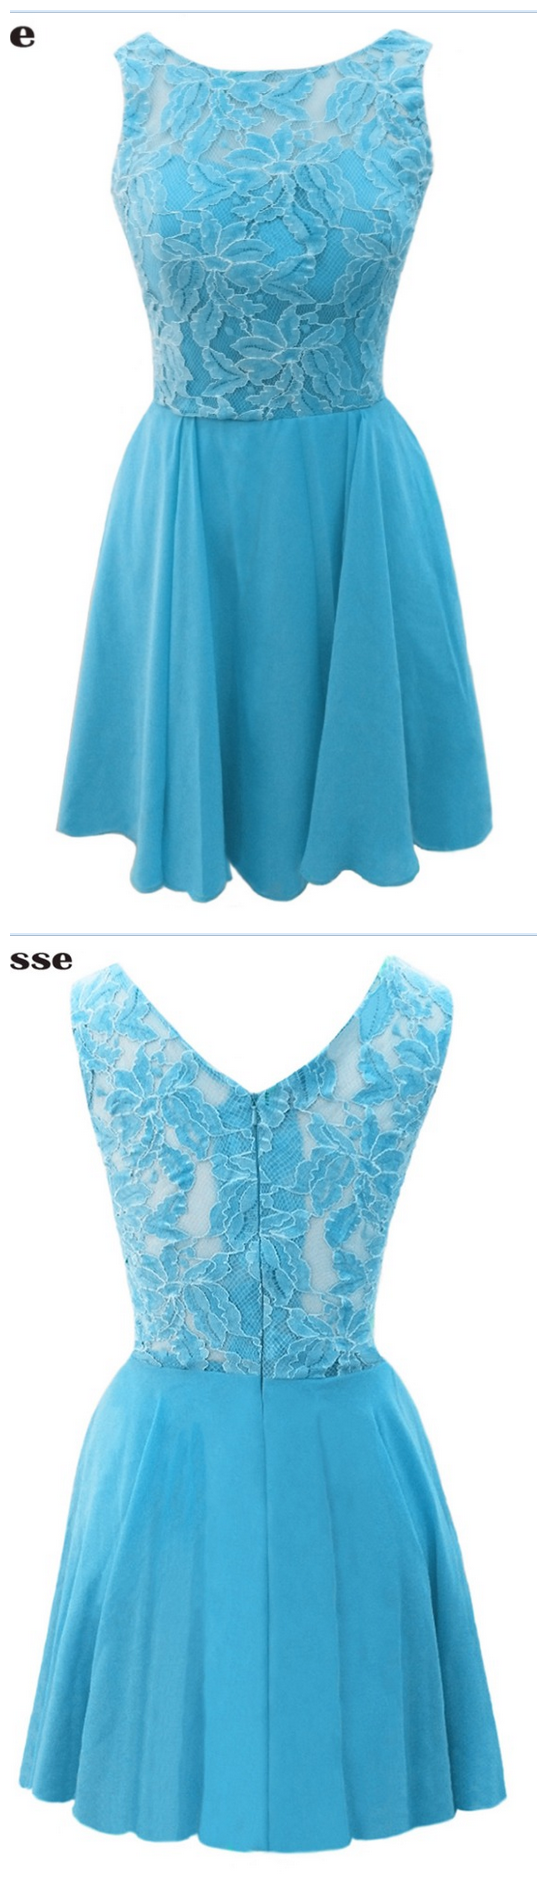 Blue Chiffon Lace Top Short Evening Dresses, Vestido De Festa Cap Sleeves V-back Prom Party Gown